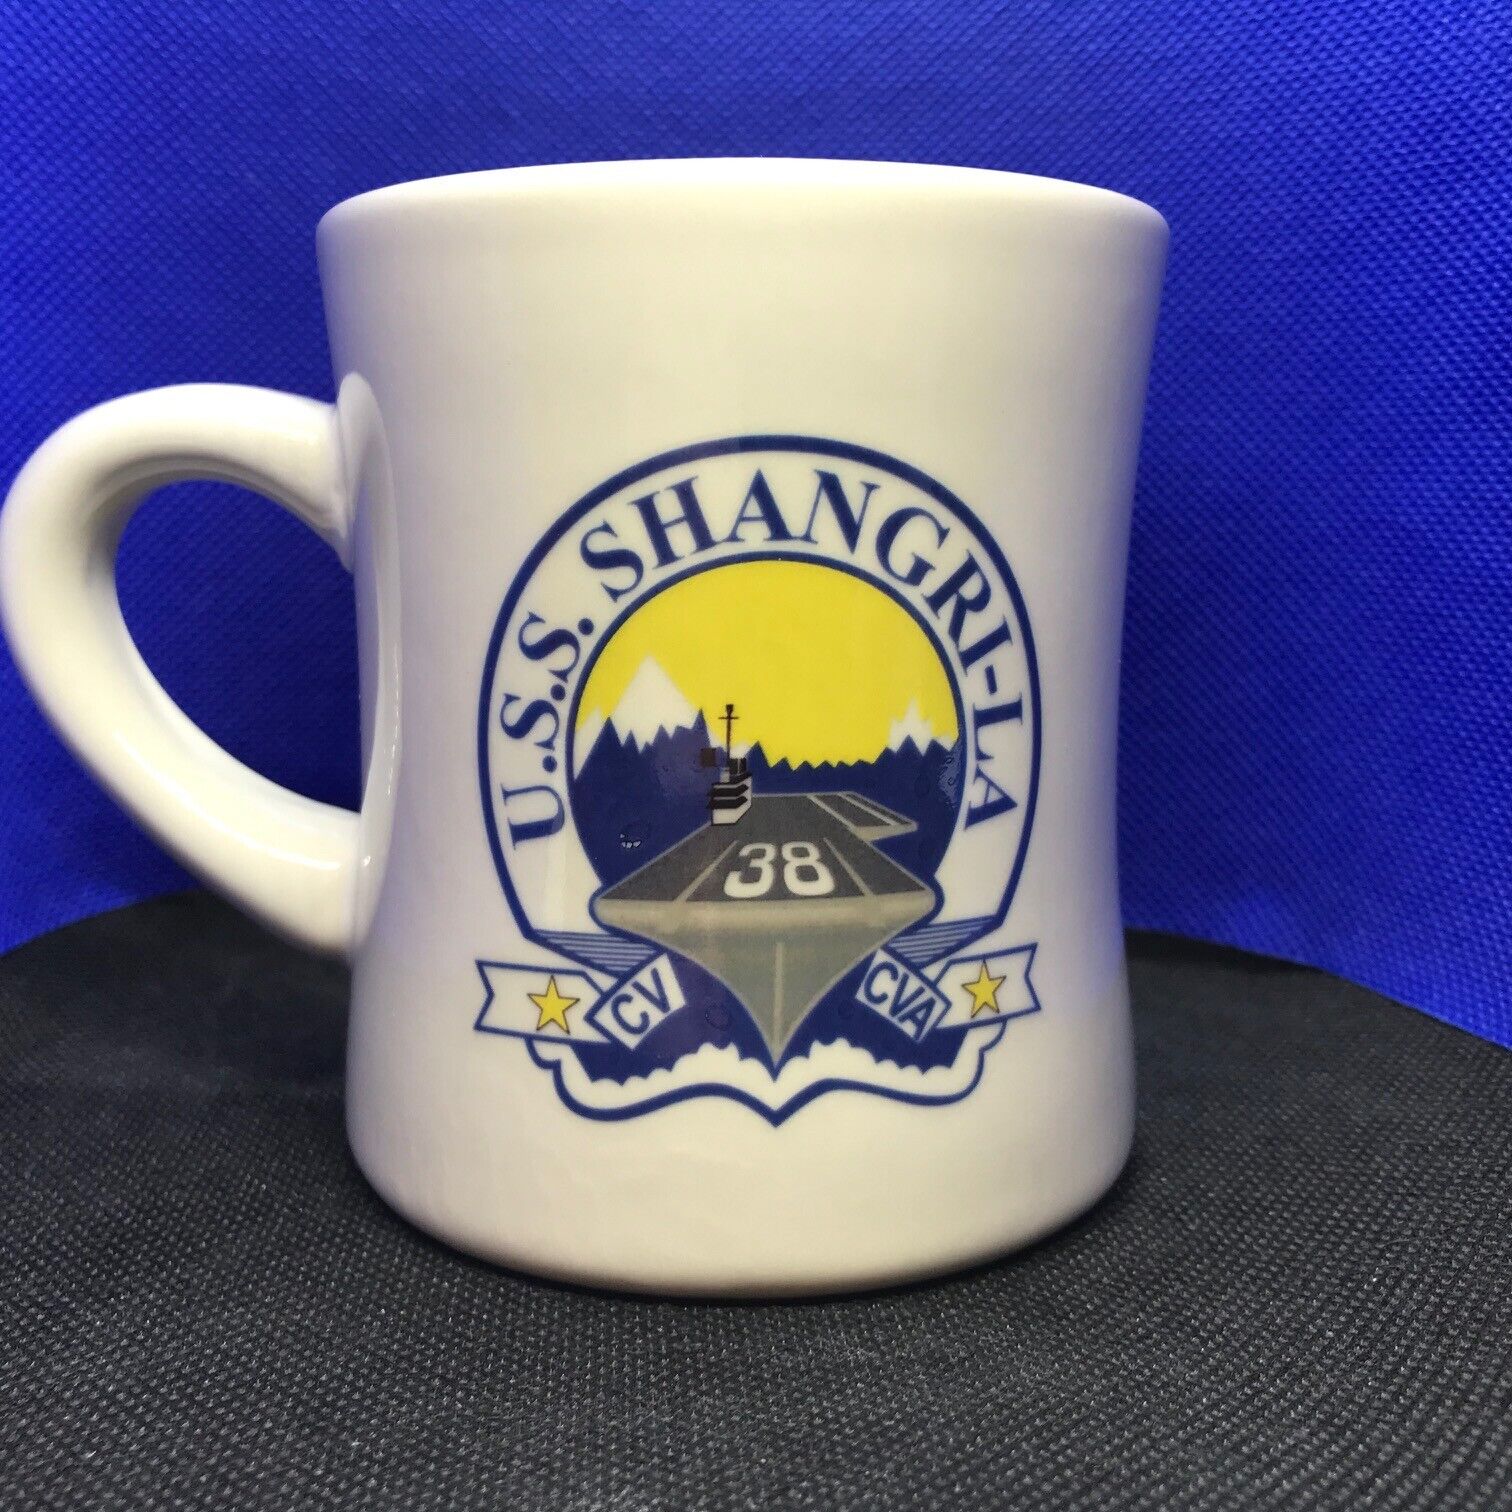 Victory Mug, USS SHANGRI-LA (CV/CVA 38)